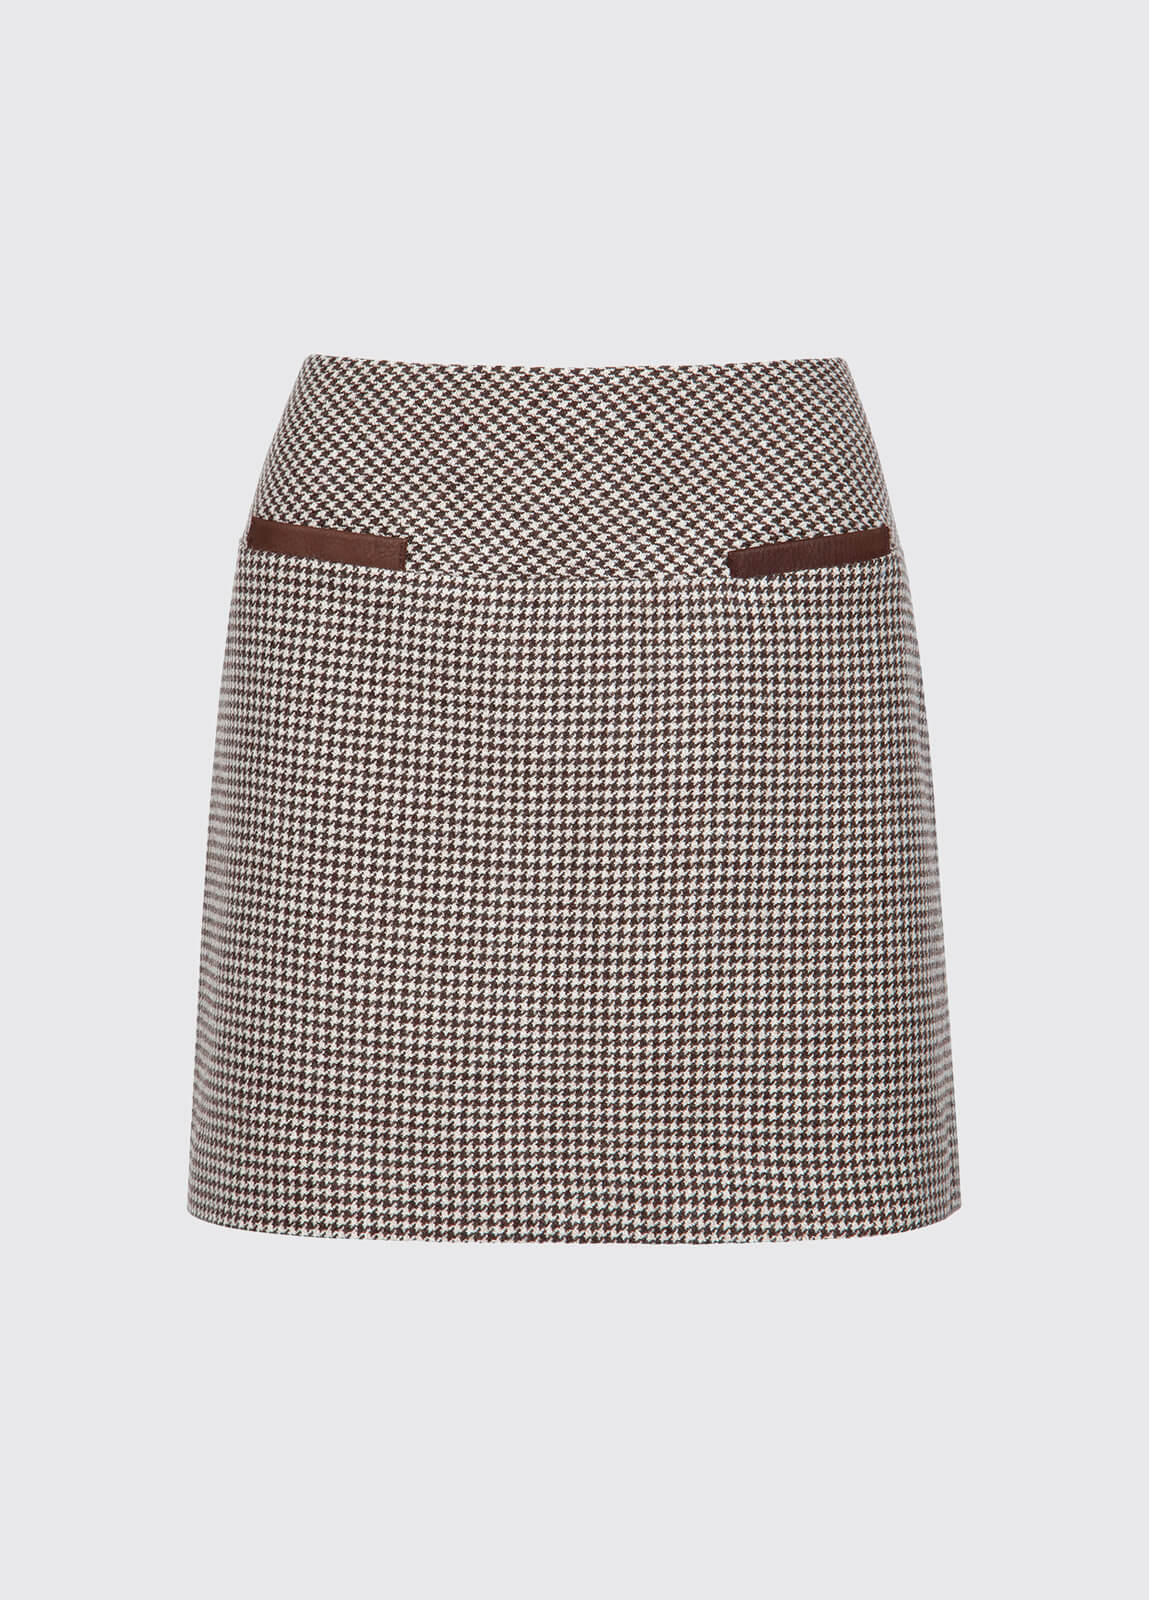 Clover Tweed Mini Skirt - Cafe